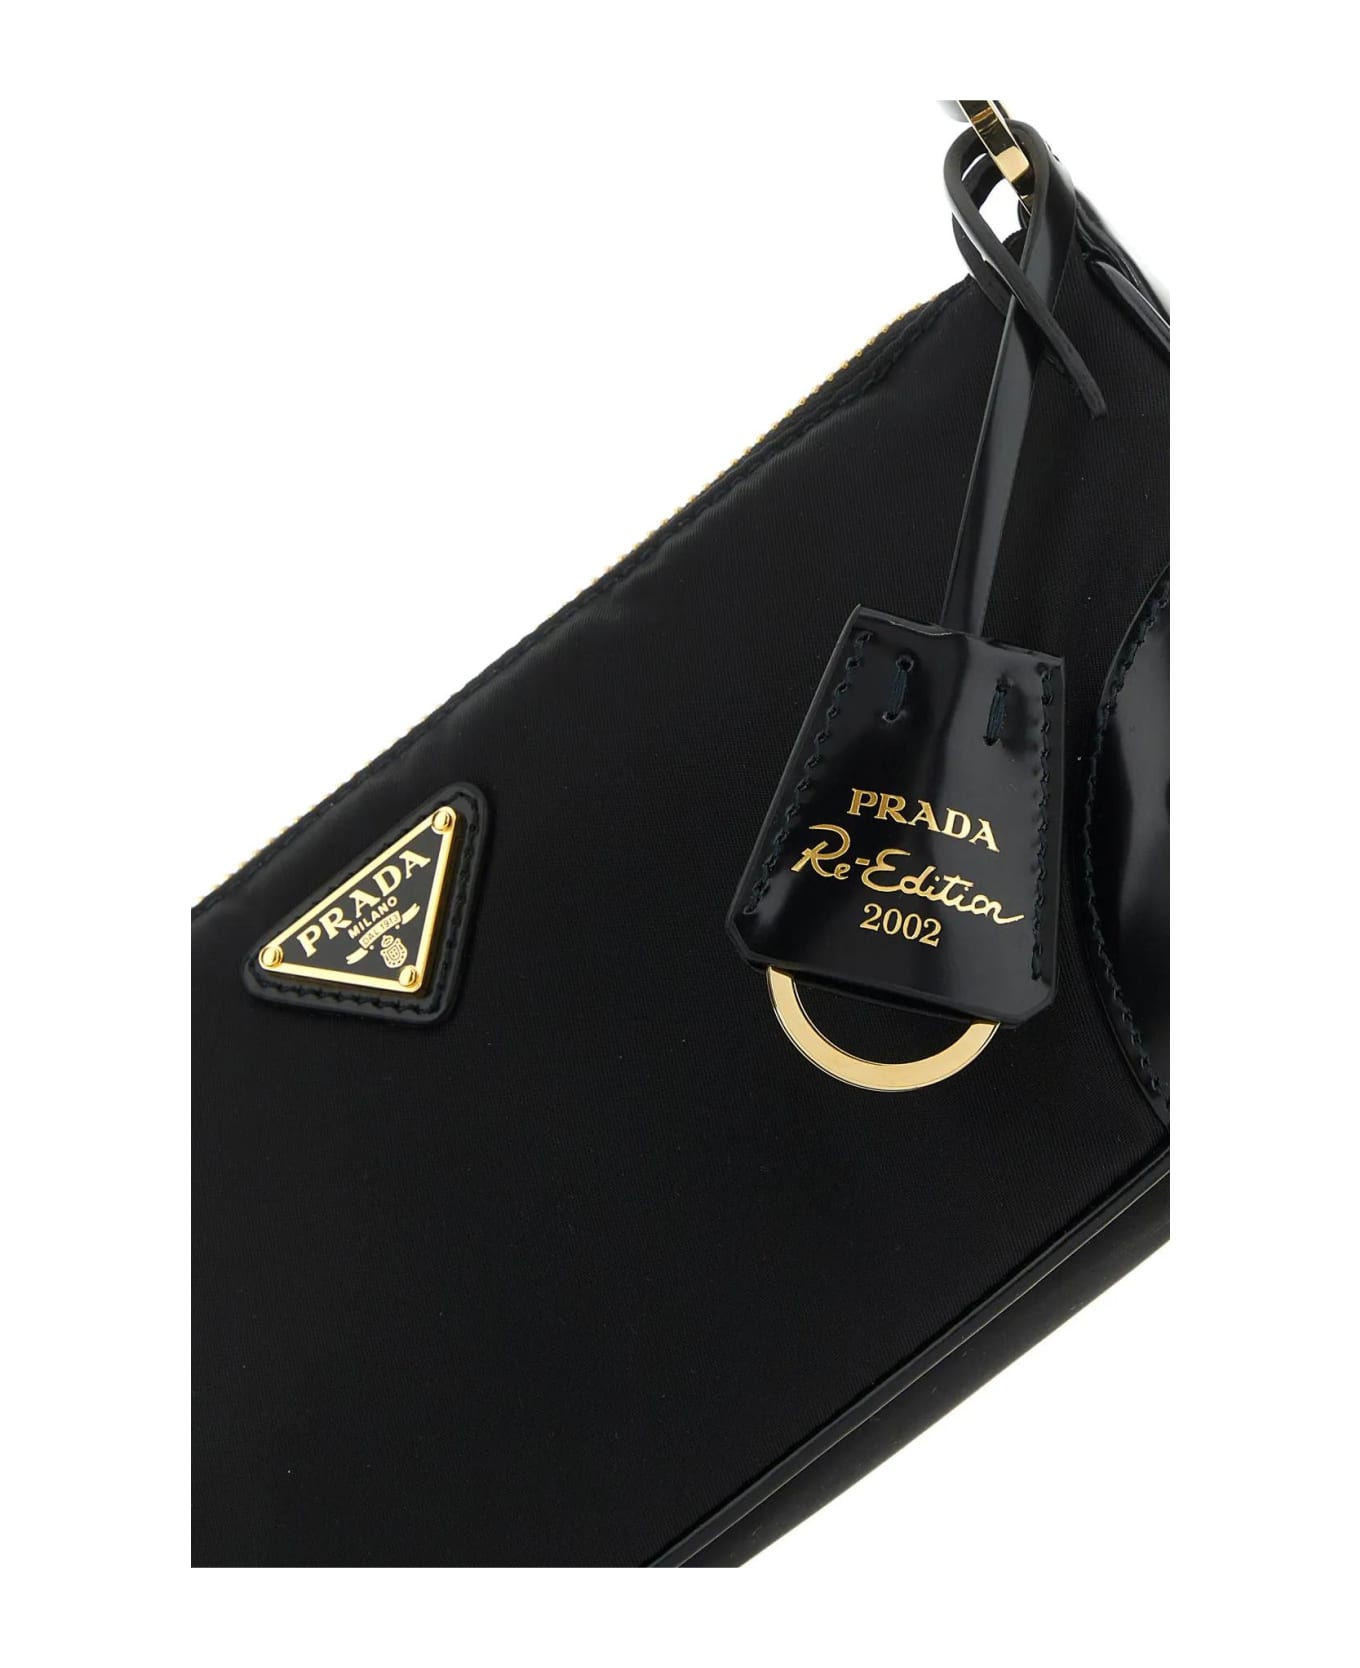 Prada Black Re-nylon Re-edition 2002 Shoulder Bag - Nero